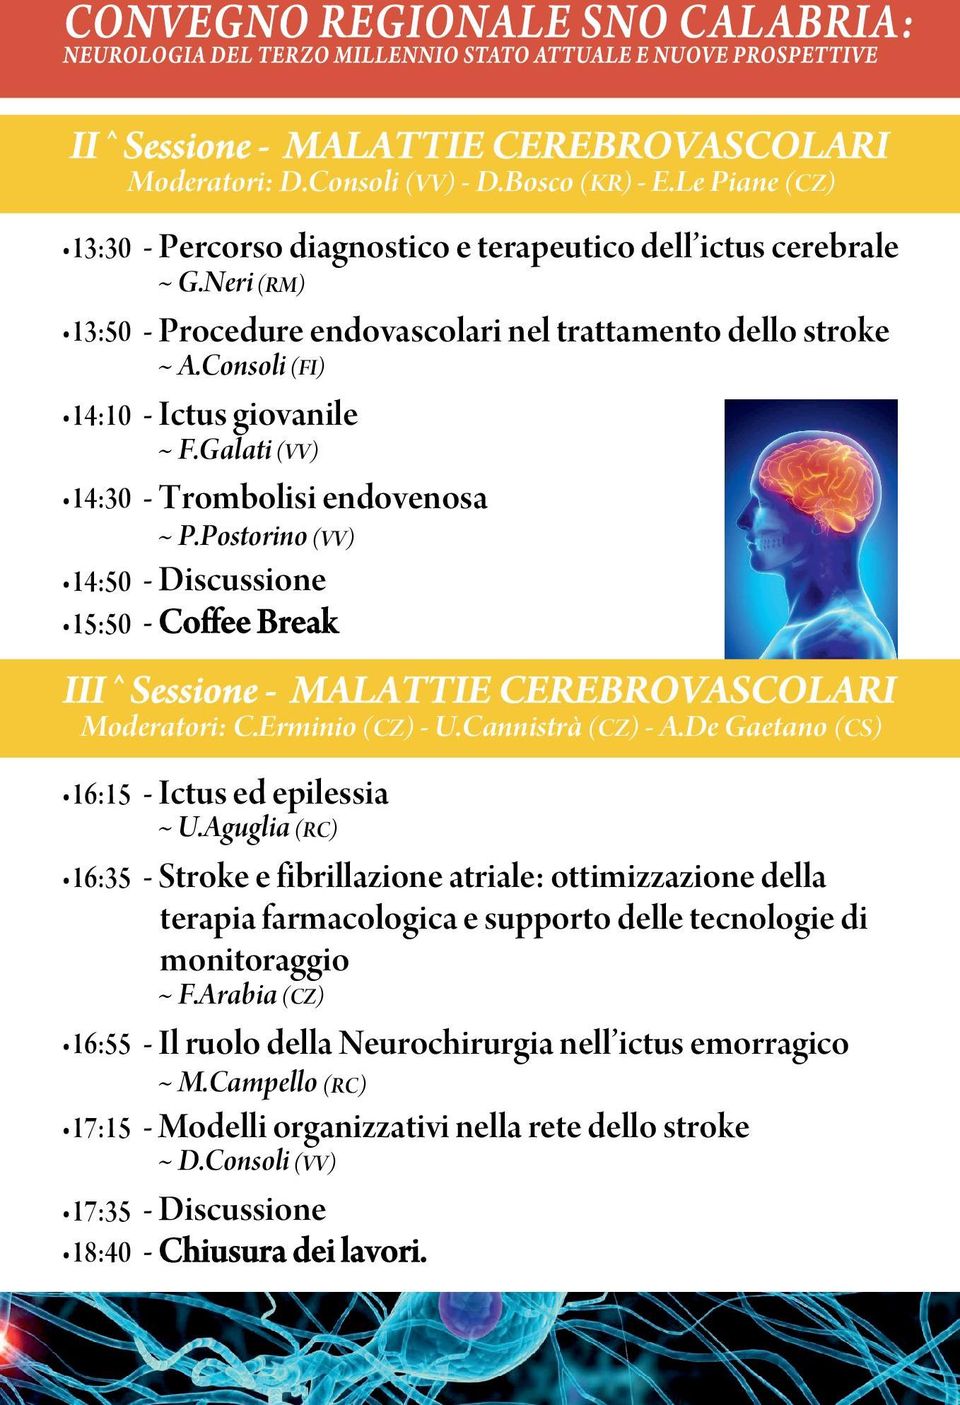 Postorino (VV) - Discussione - Coffee Break Sessione - MALATTIE CEREBRVASCLARI Moderatori: C.Erminio - U.Cannistrà - A.De Gaetano (CZ) (CZ) (CS) 16:15 - Ictus ed epilessia ~ U.